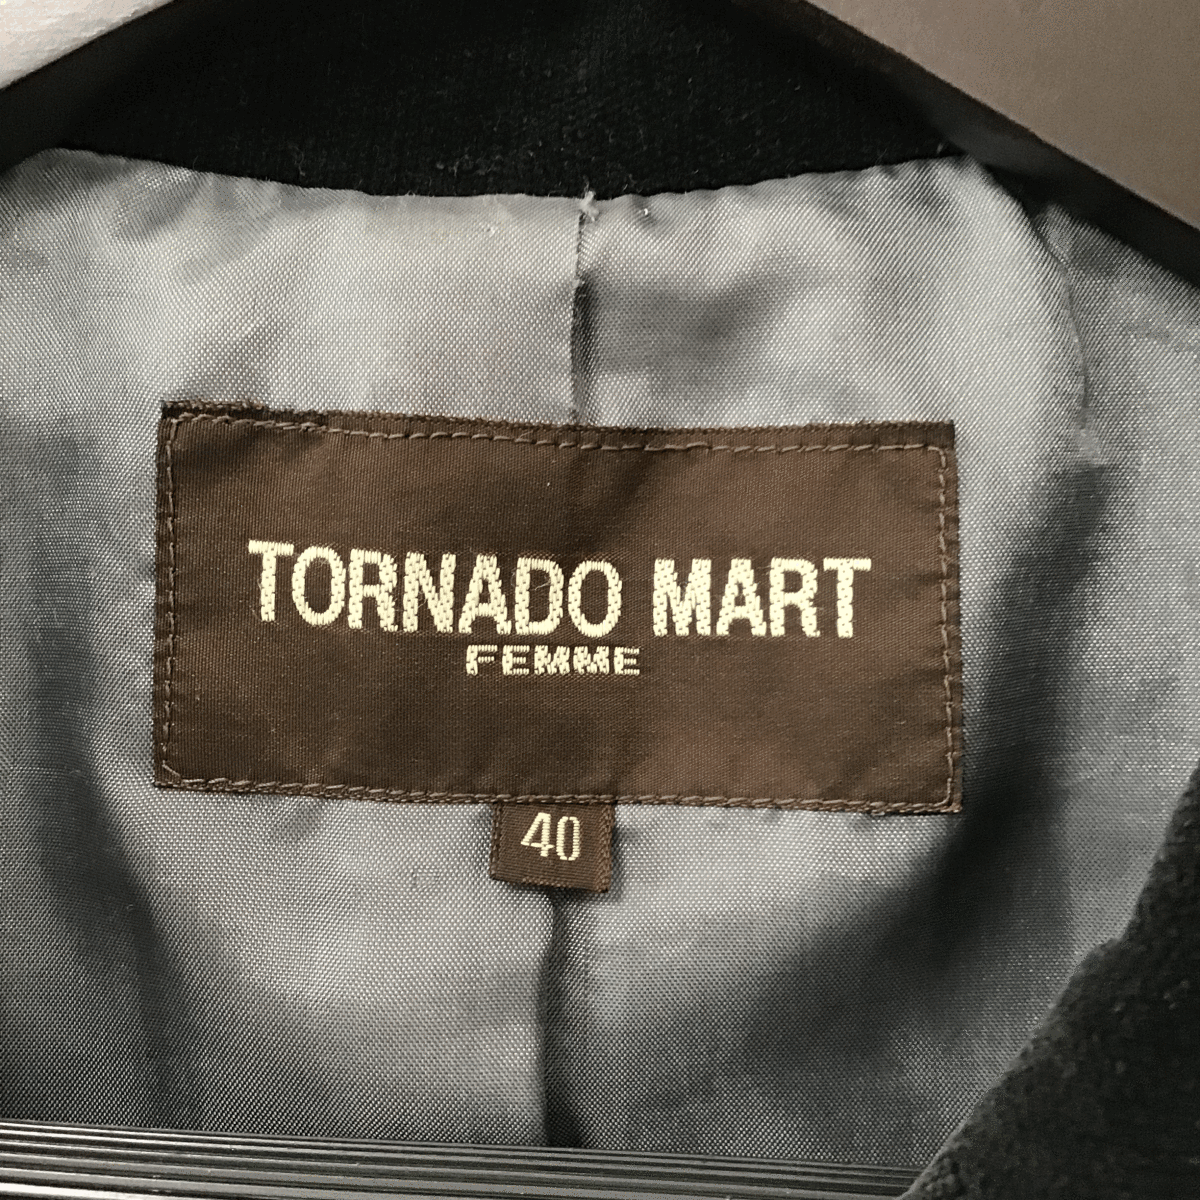 A457* TORNADO MARTl Tornado Mart corduroy jacket black size 40